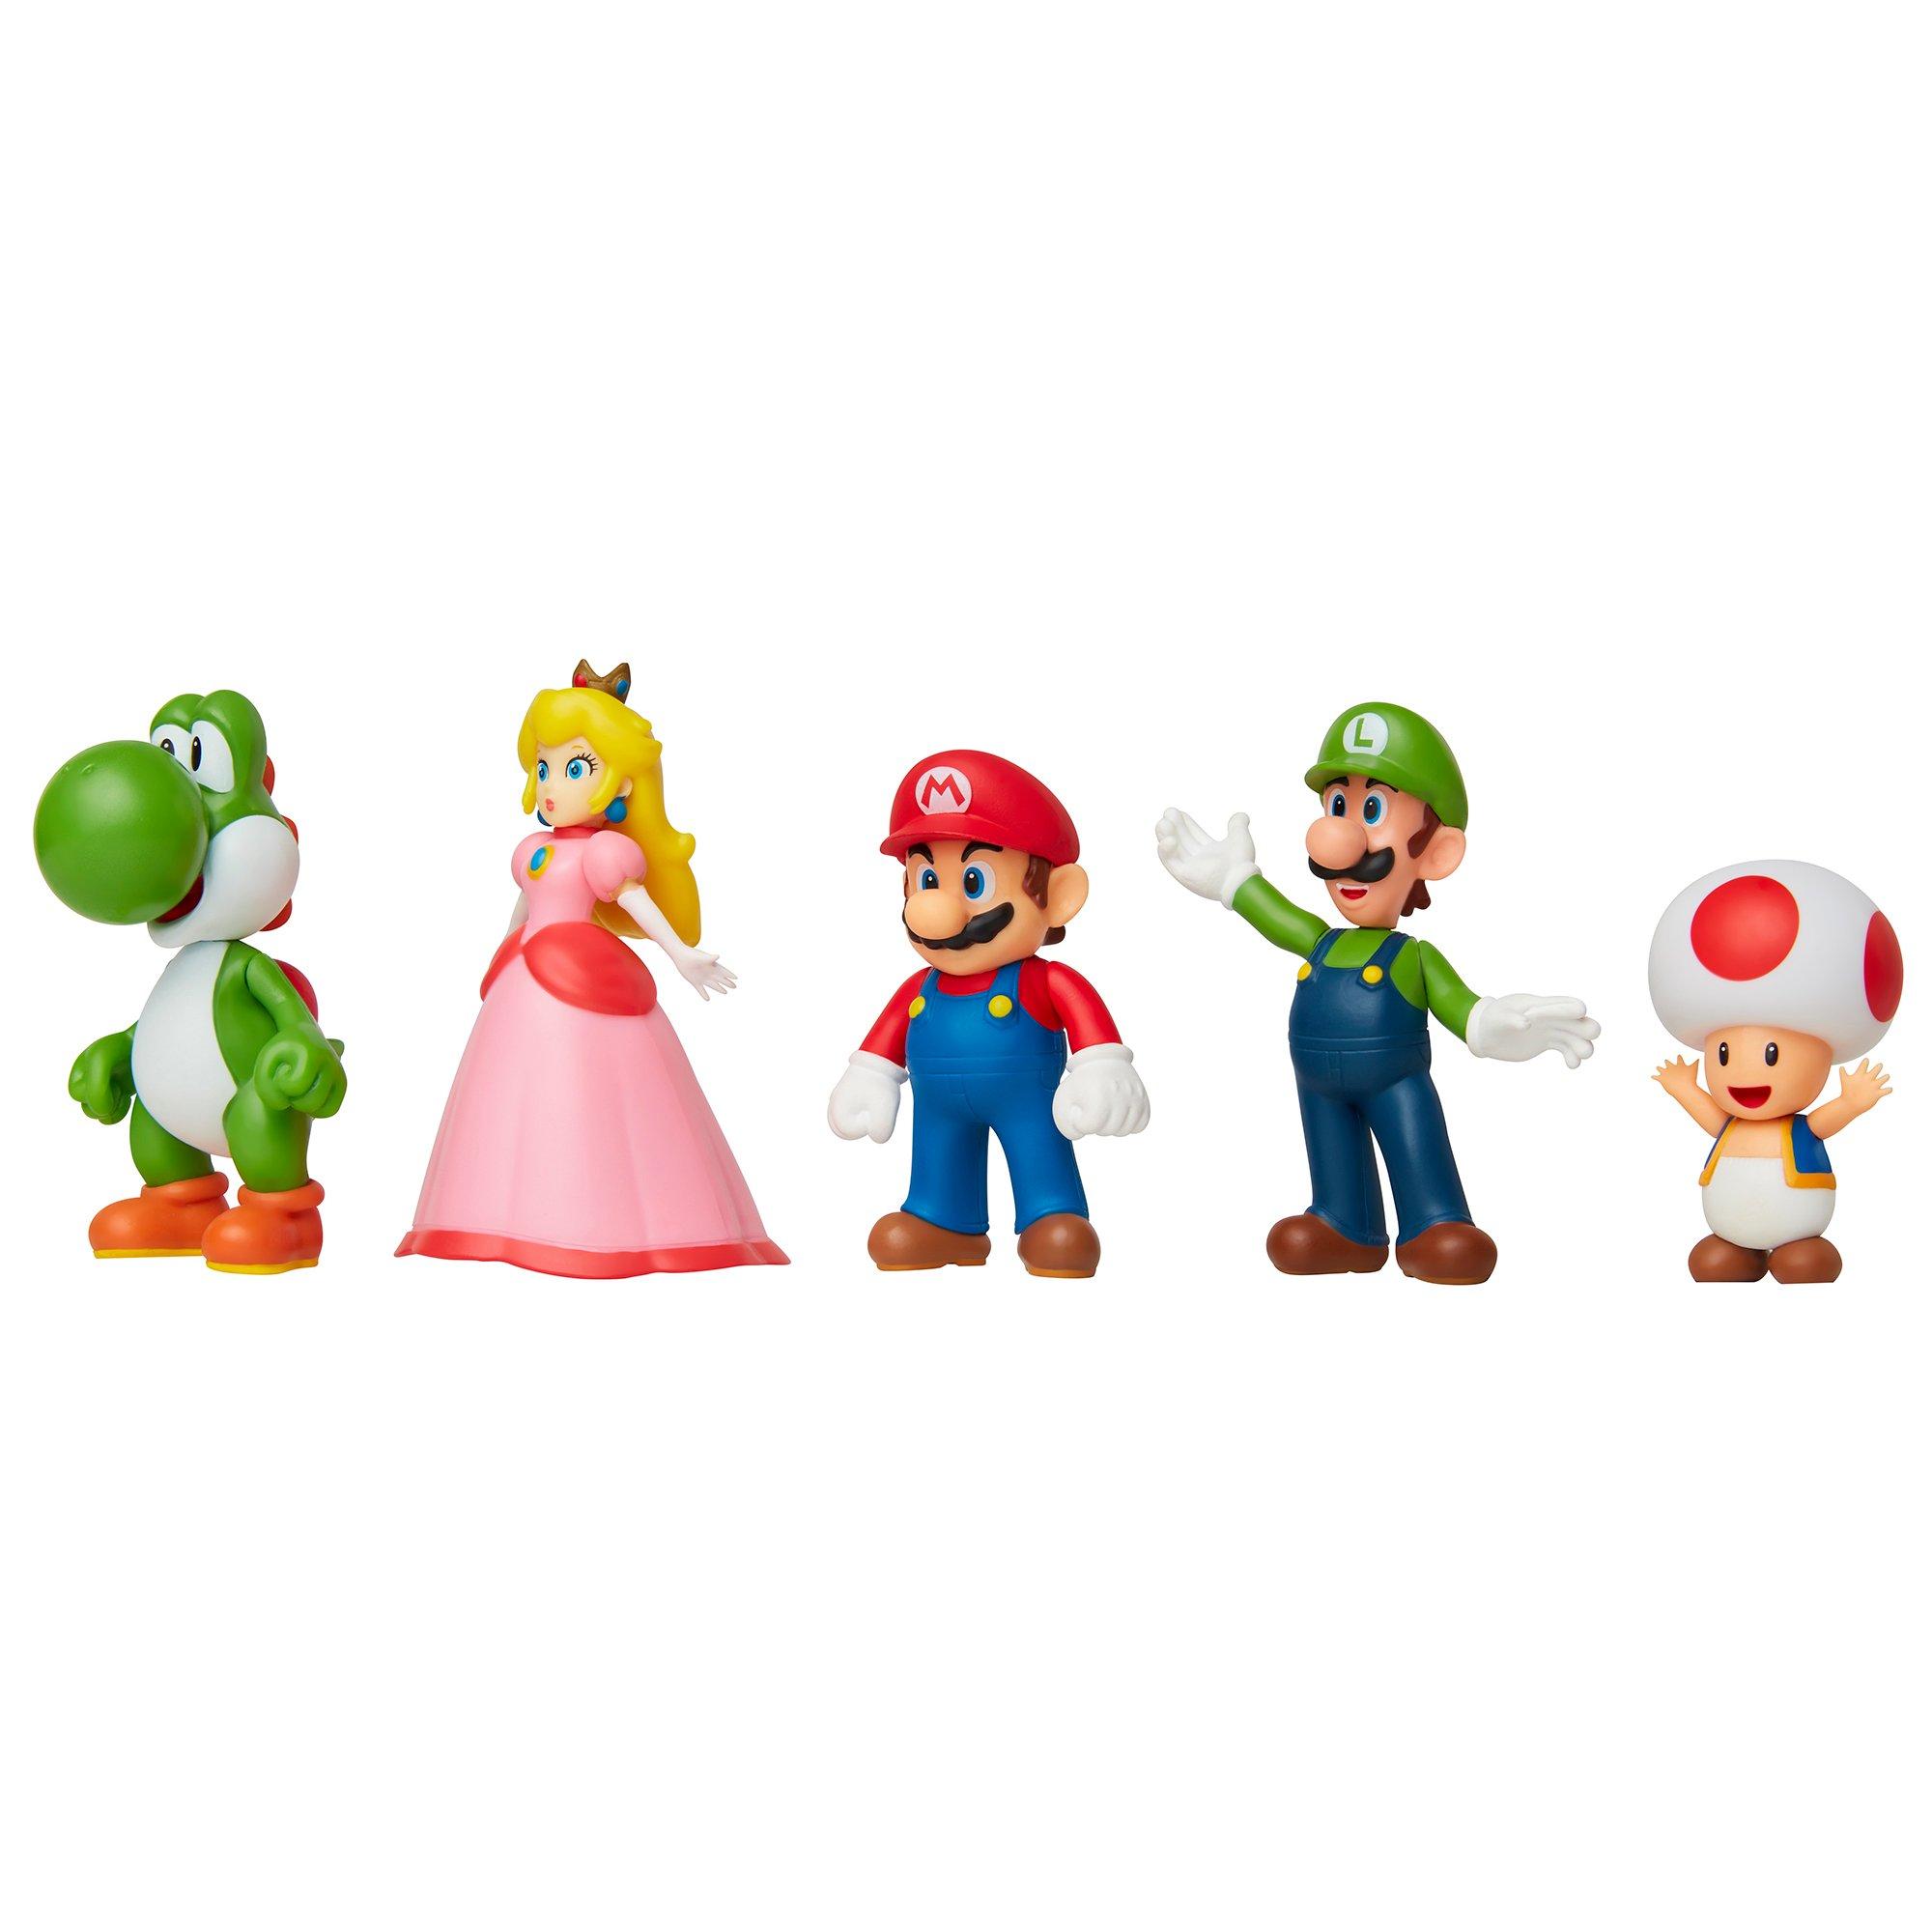 Super Mario Nintendo Figures, Set of 10, Friends and Enemies, 6.5 cm